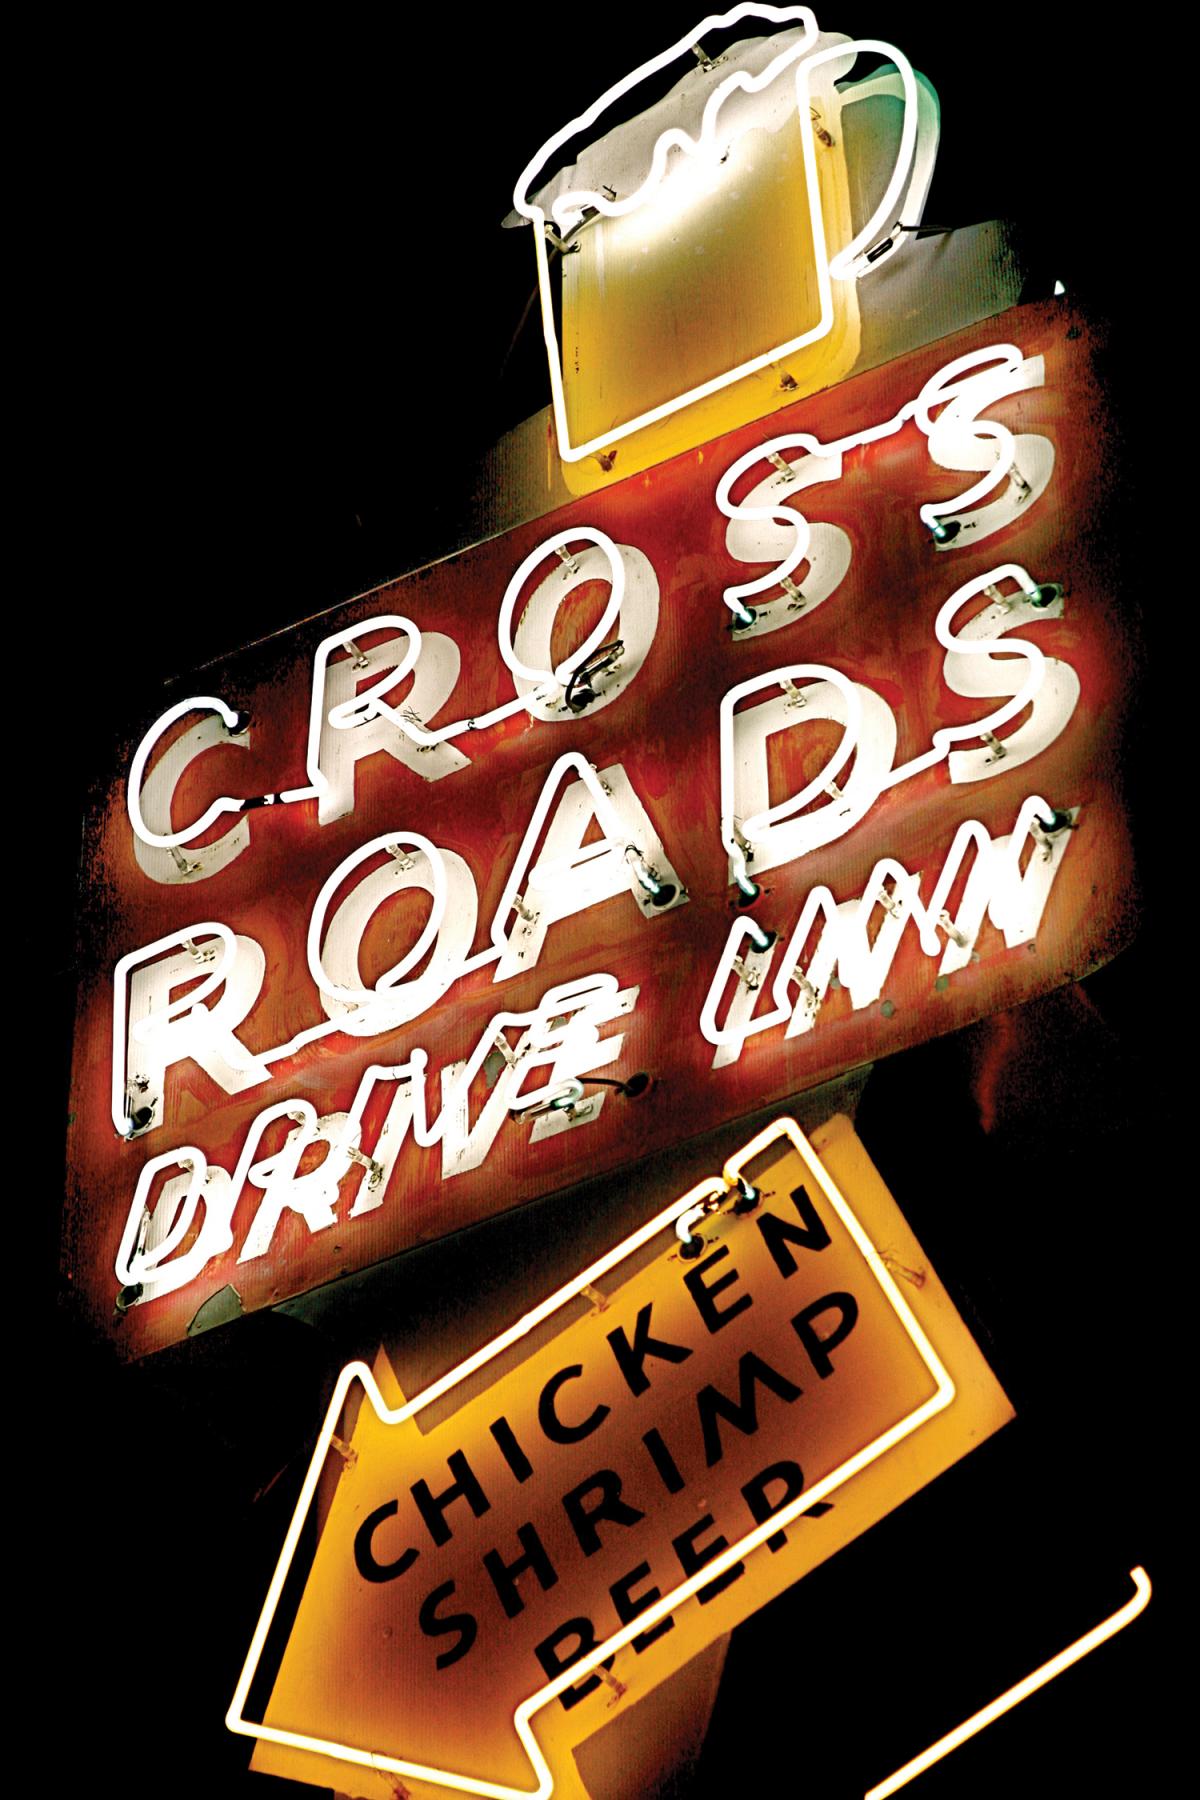 Neon sign reading "Cross Roads Drive Inn"